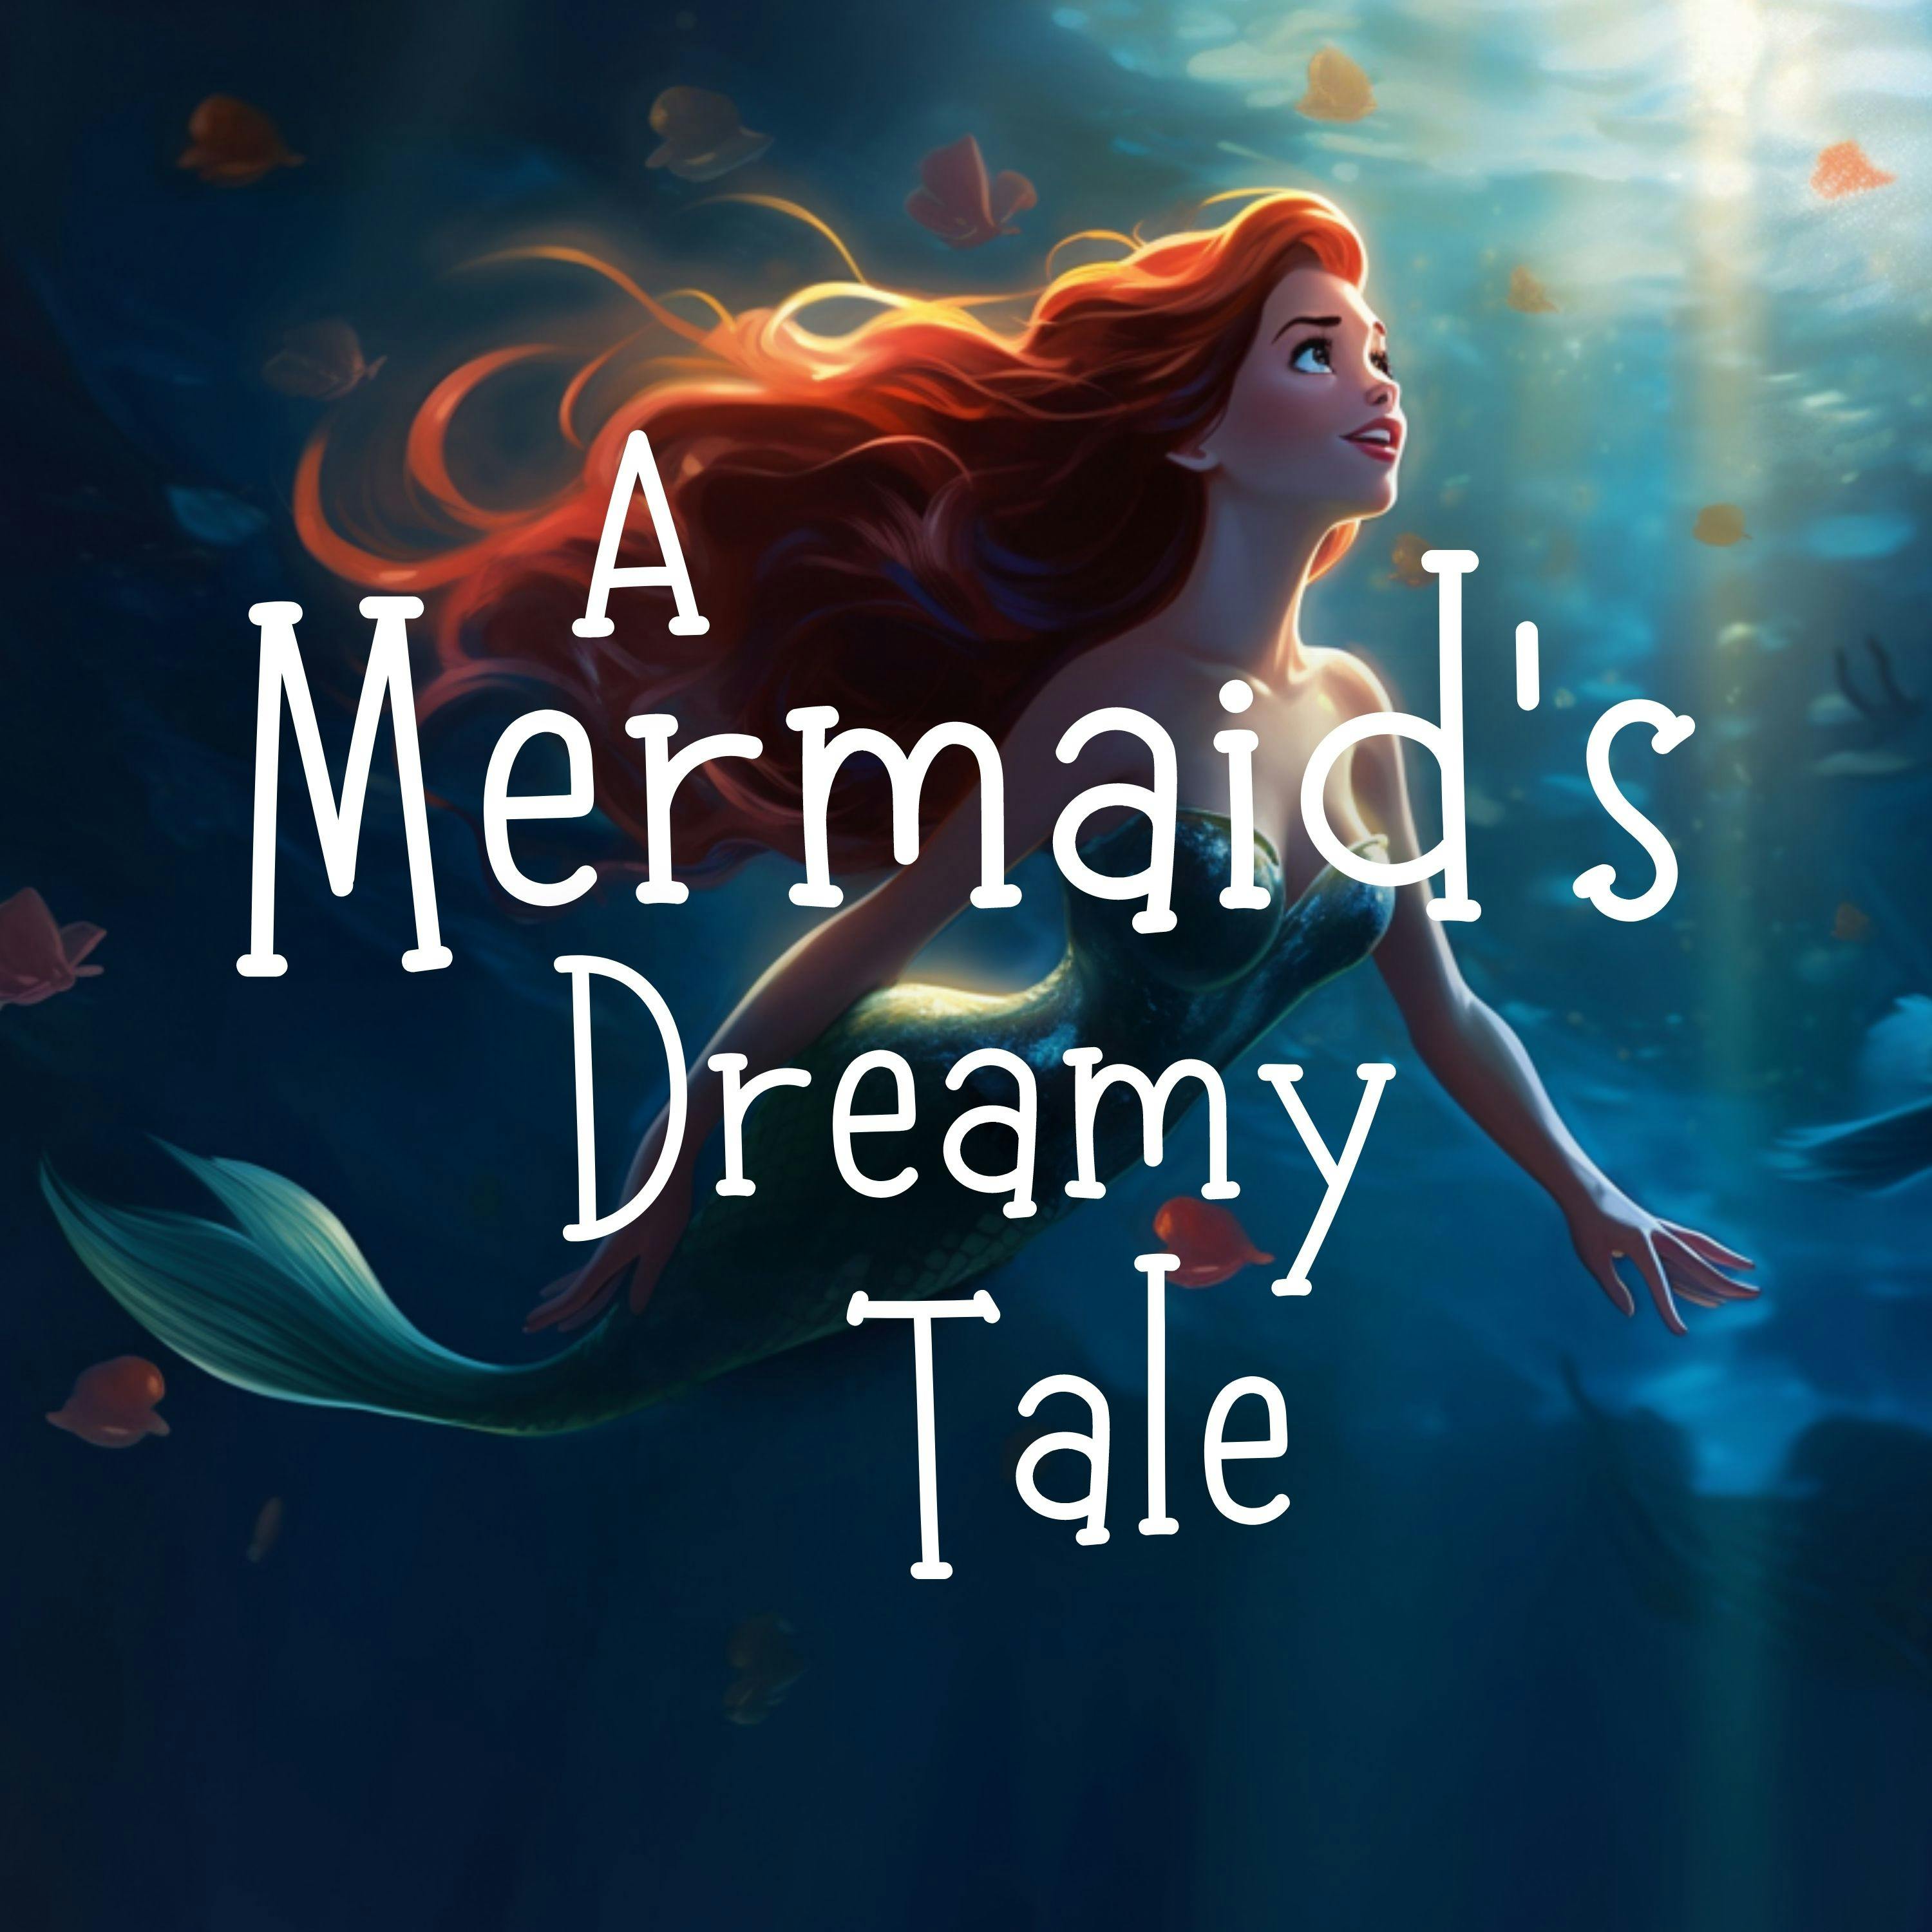 A Mermaid's Dreamy Tale